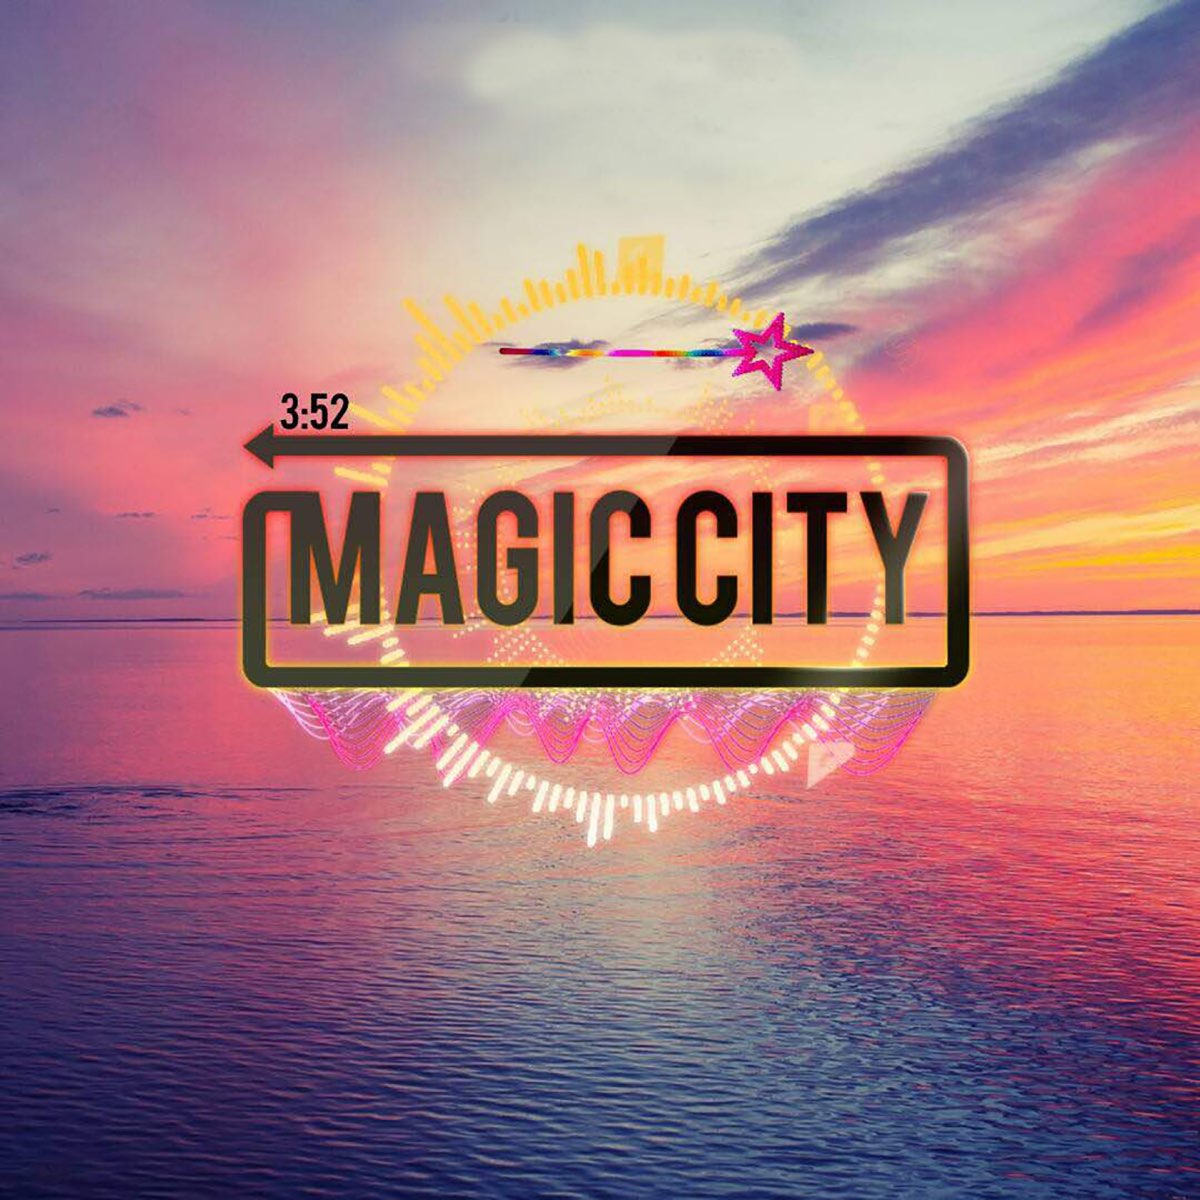 Magic альбомы. Magic City. Мэджик Сити альбом. Magic City обложка. Мэджик Сити обложка альбома.